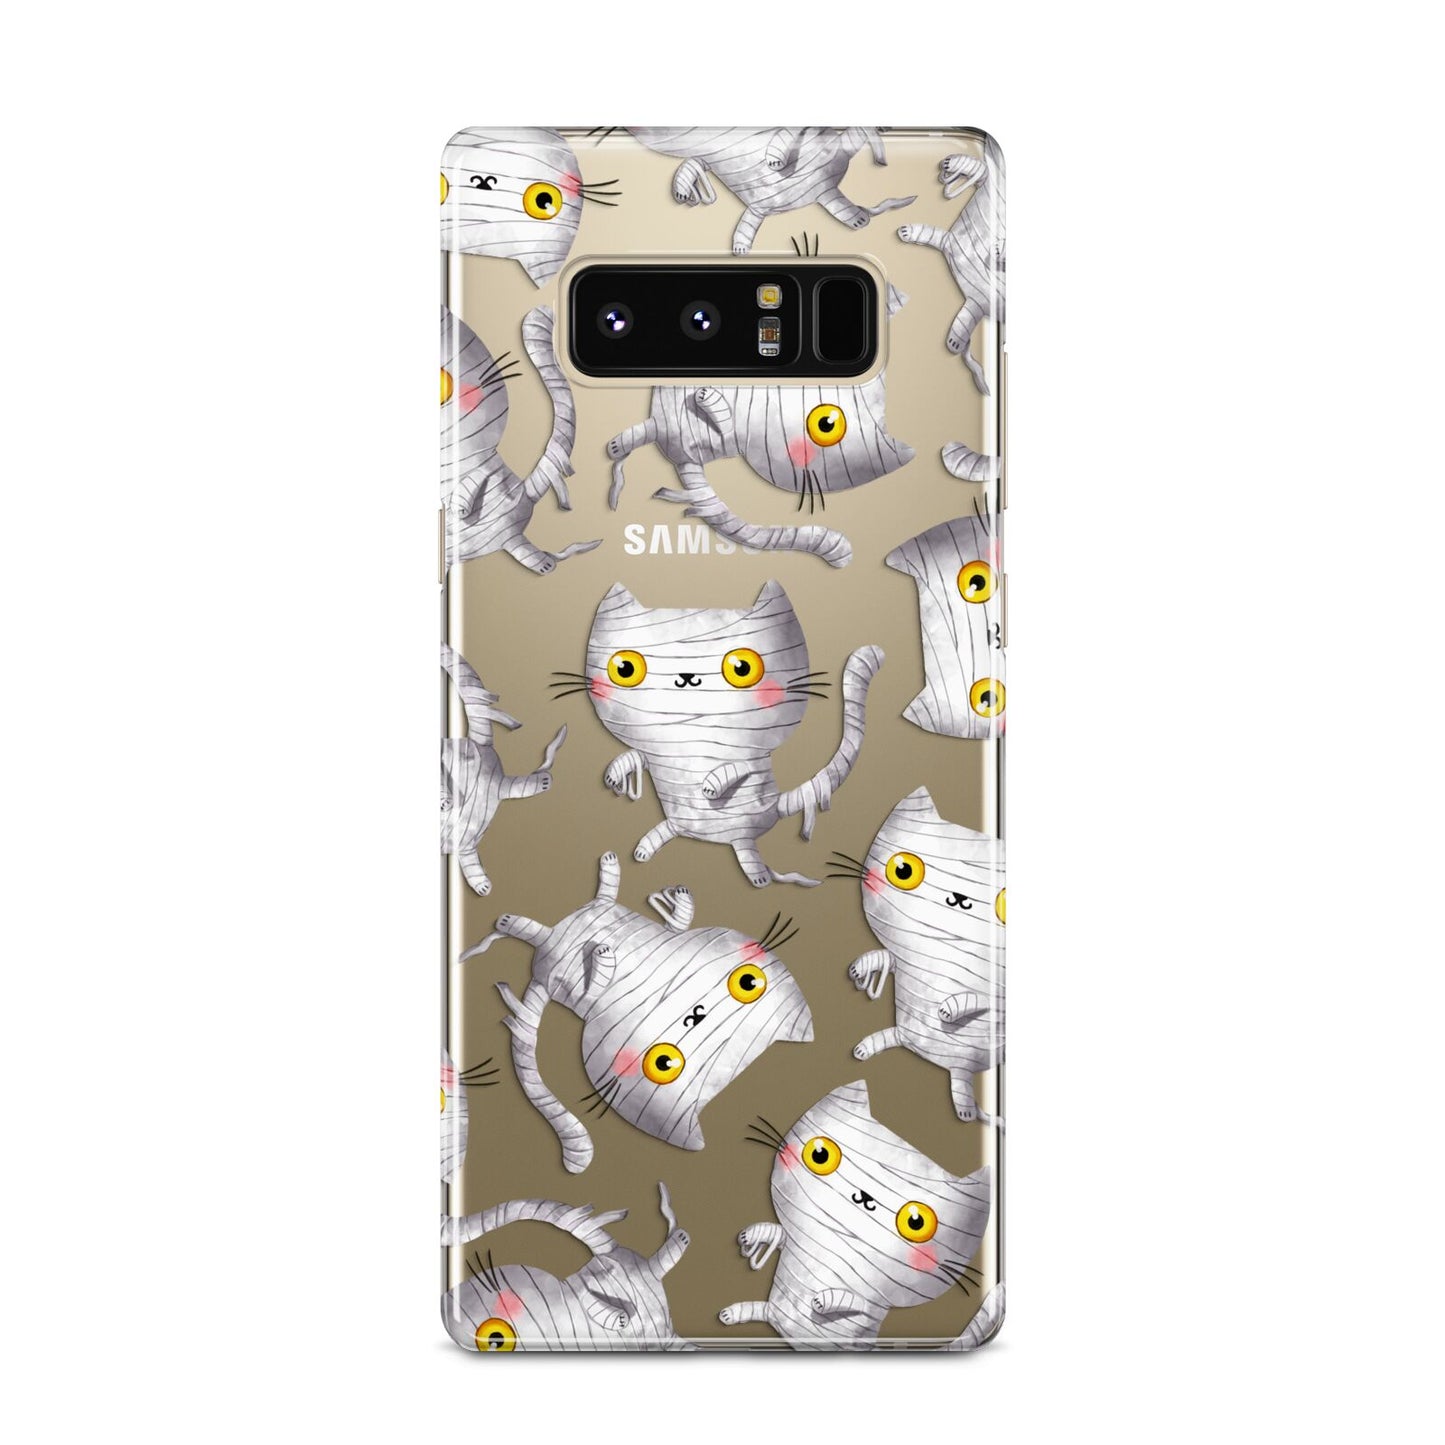 Mummy Cats Samsung Galaxy Note 8 Case